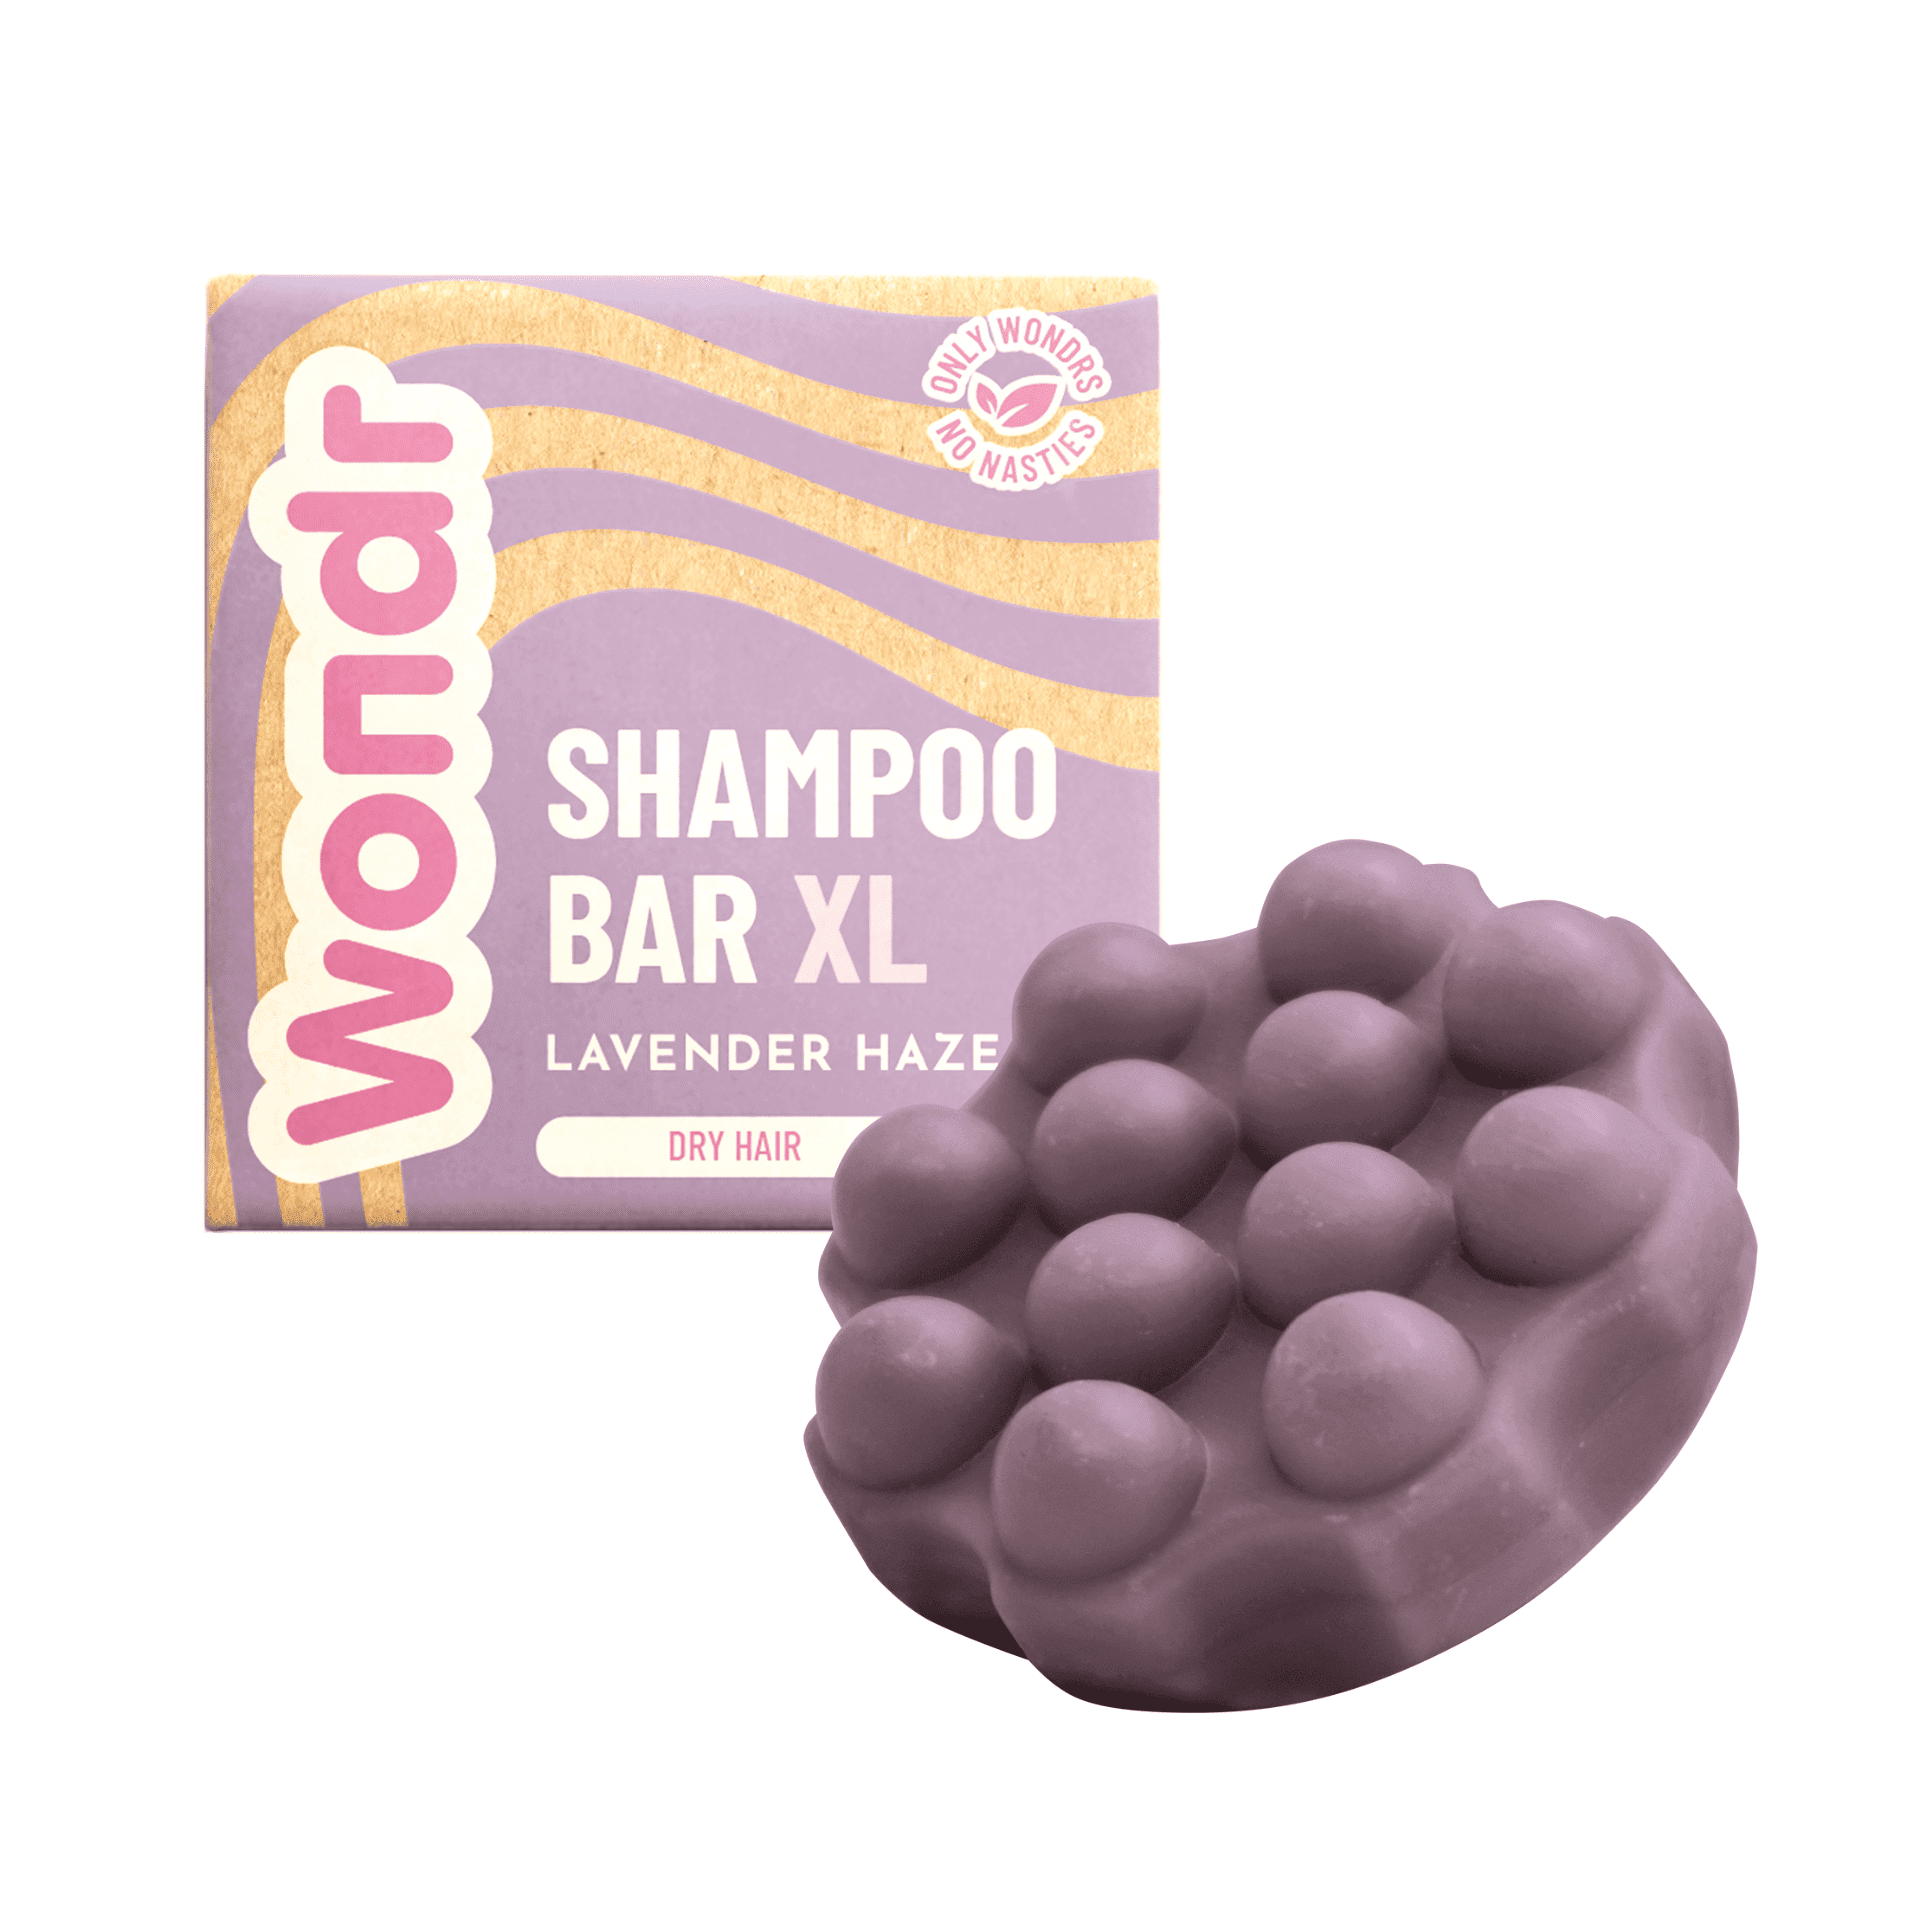 WONDR Shampoo Bar XL Lavender Haze